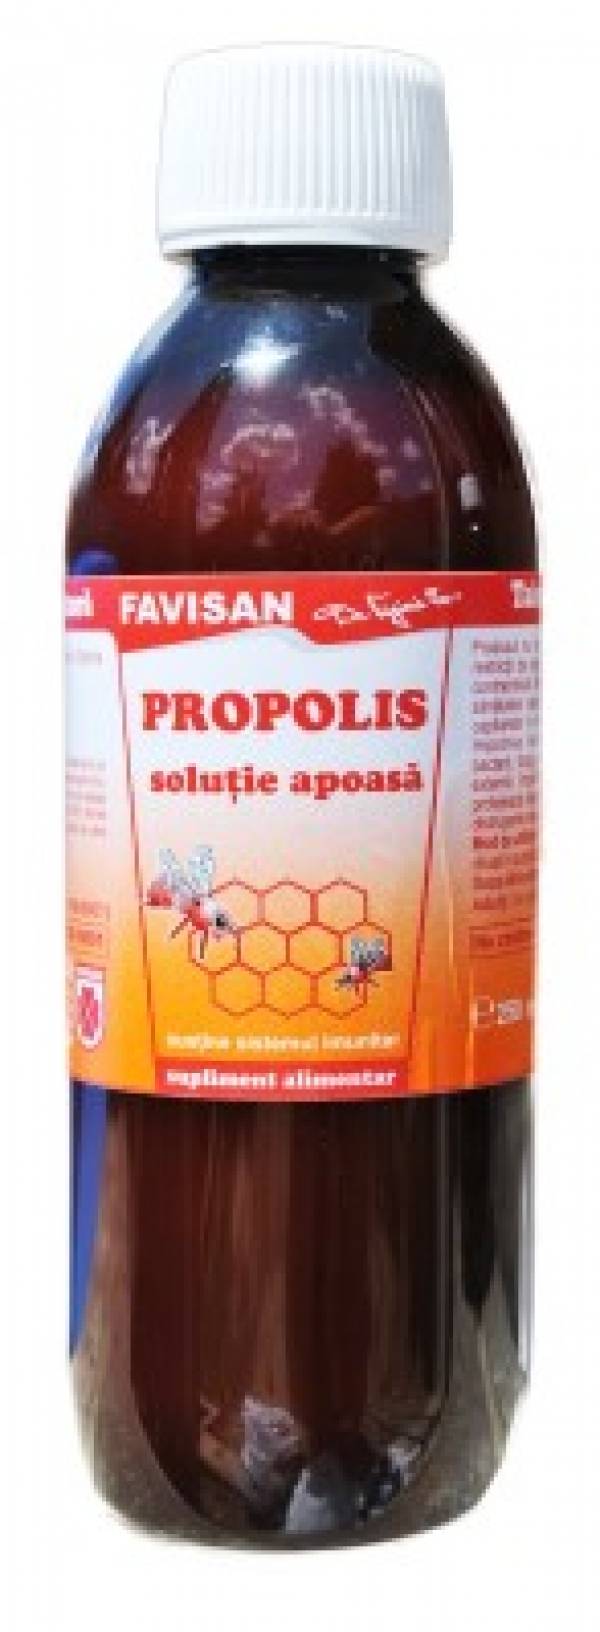 Propolis solutie apoasa 250ml - favisan